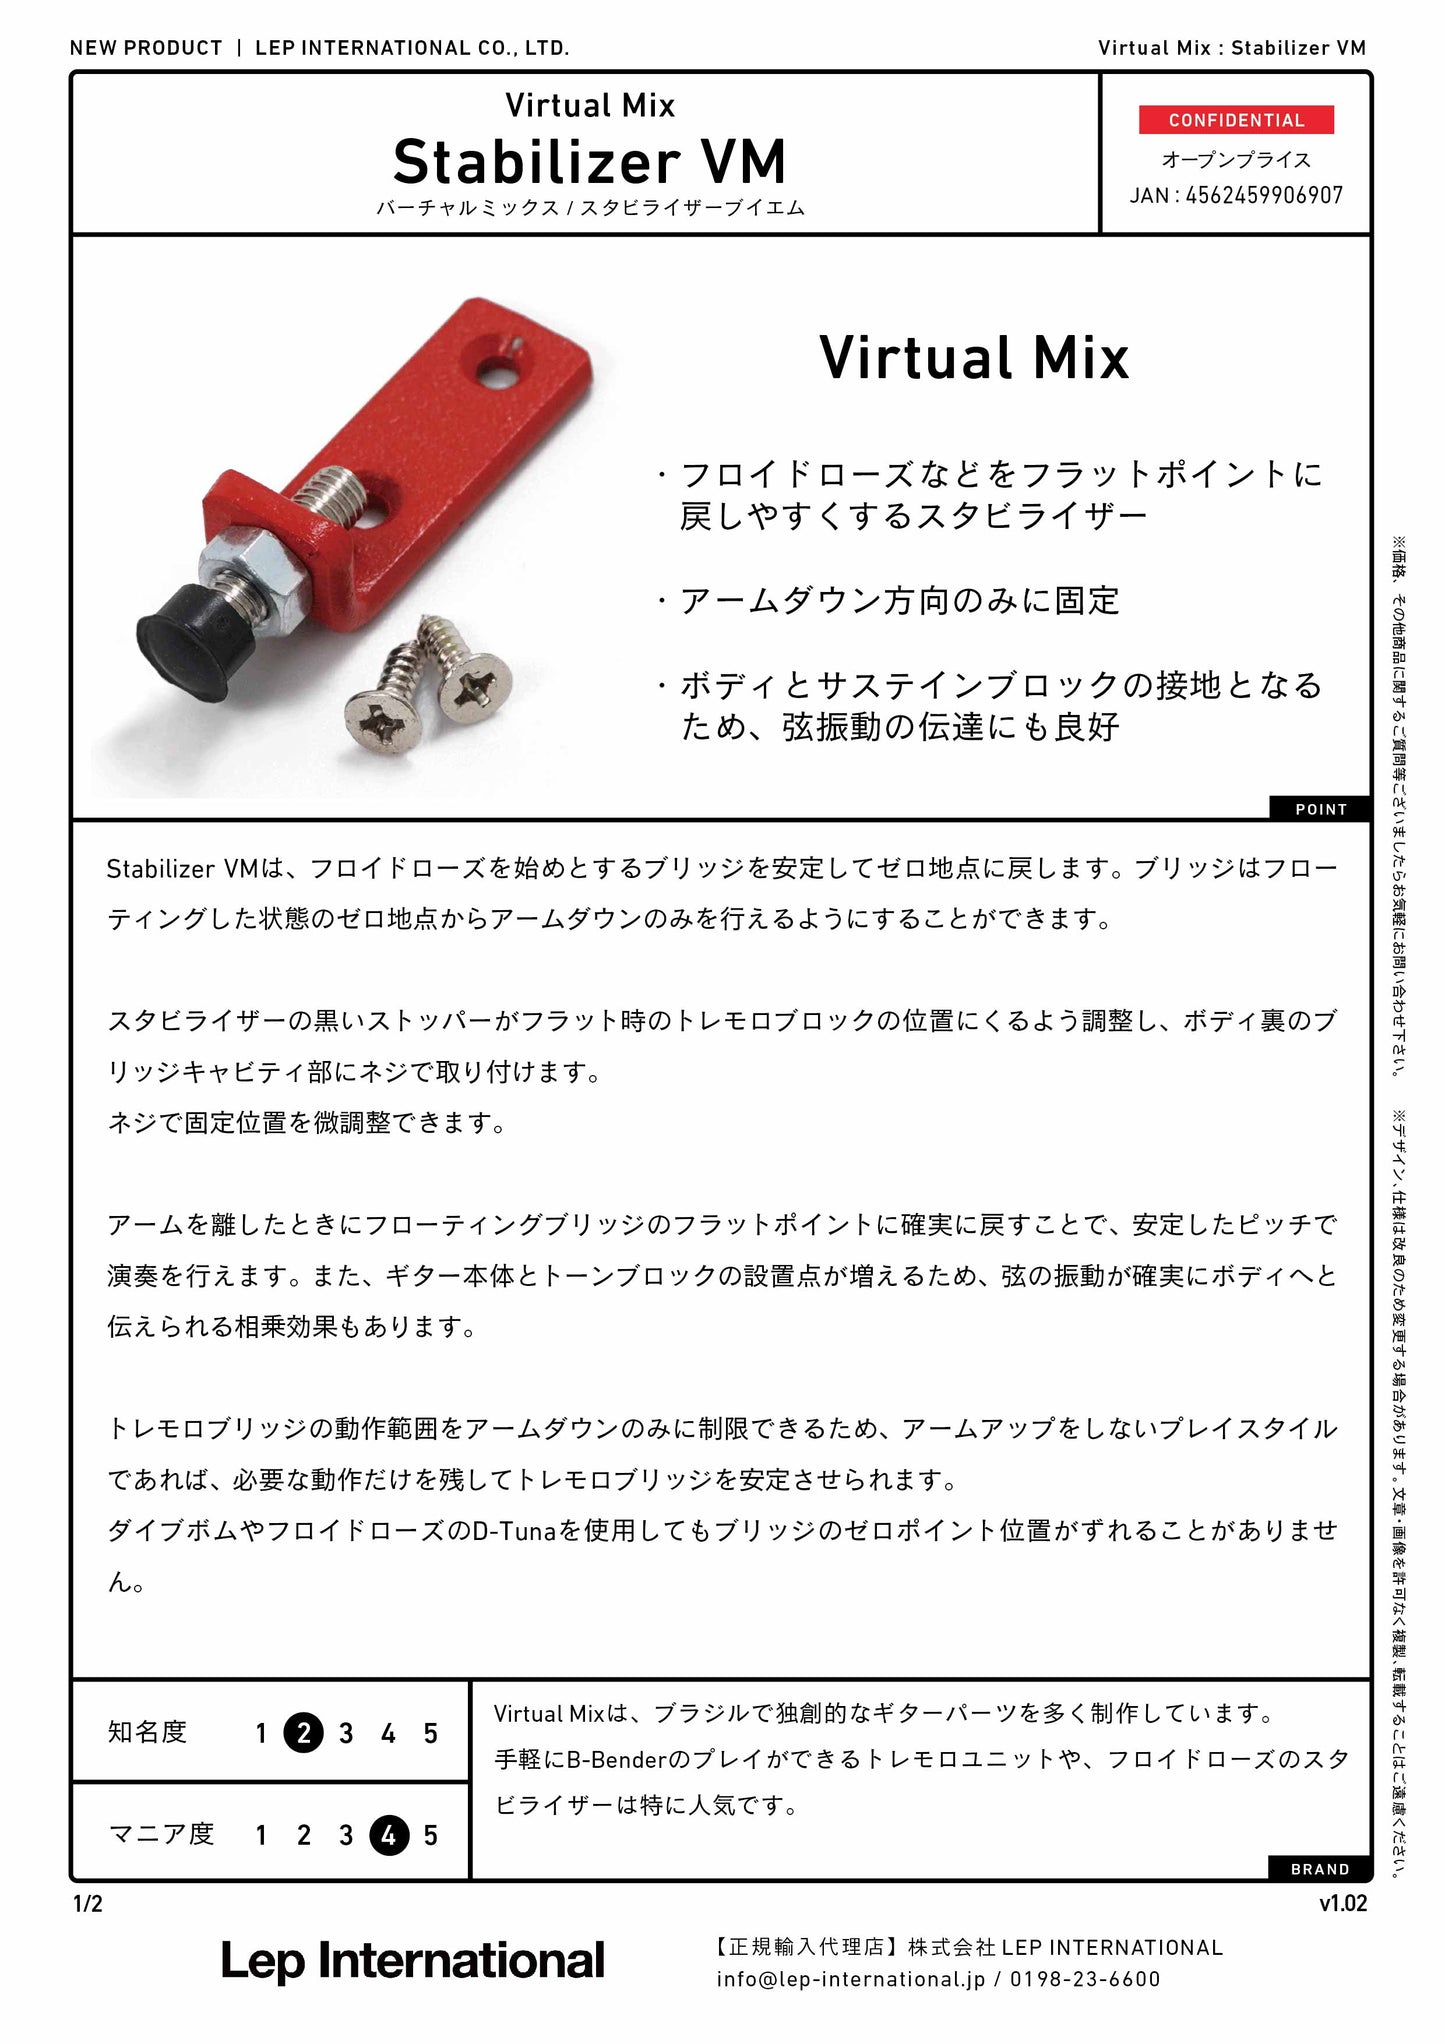 Virtual Mix / Stabilizer VM